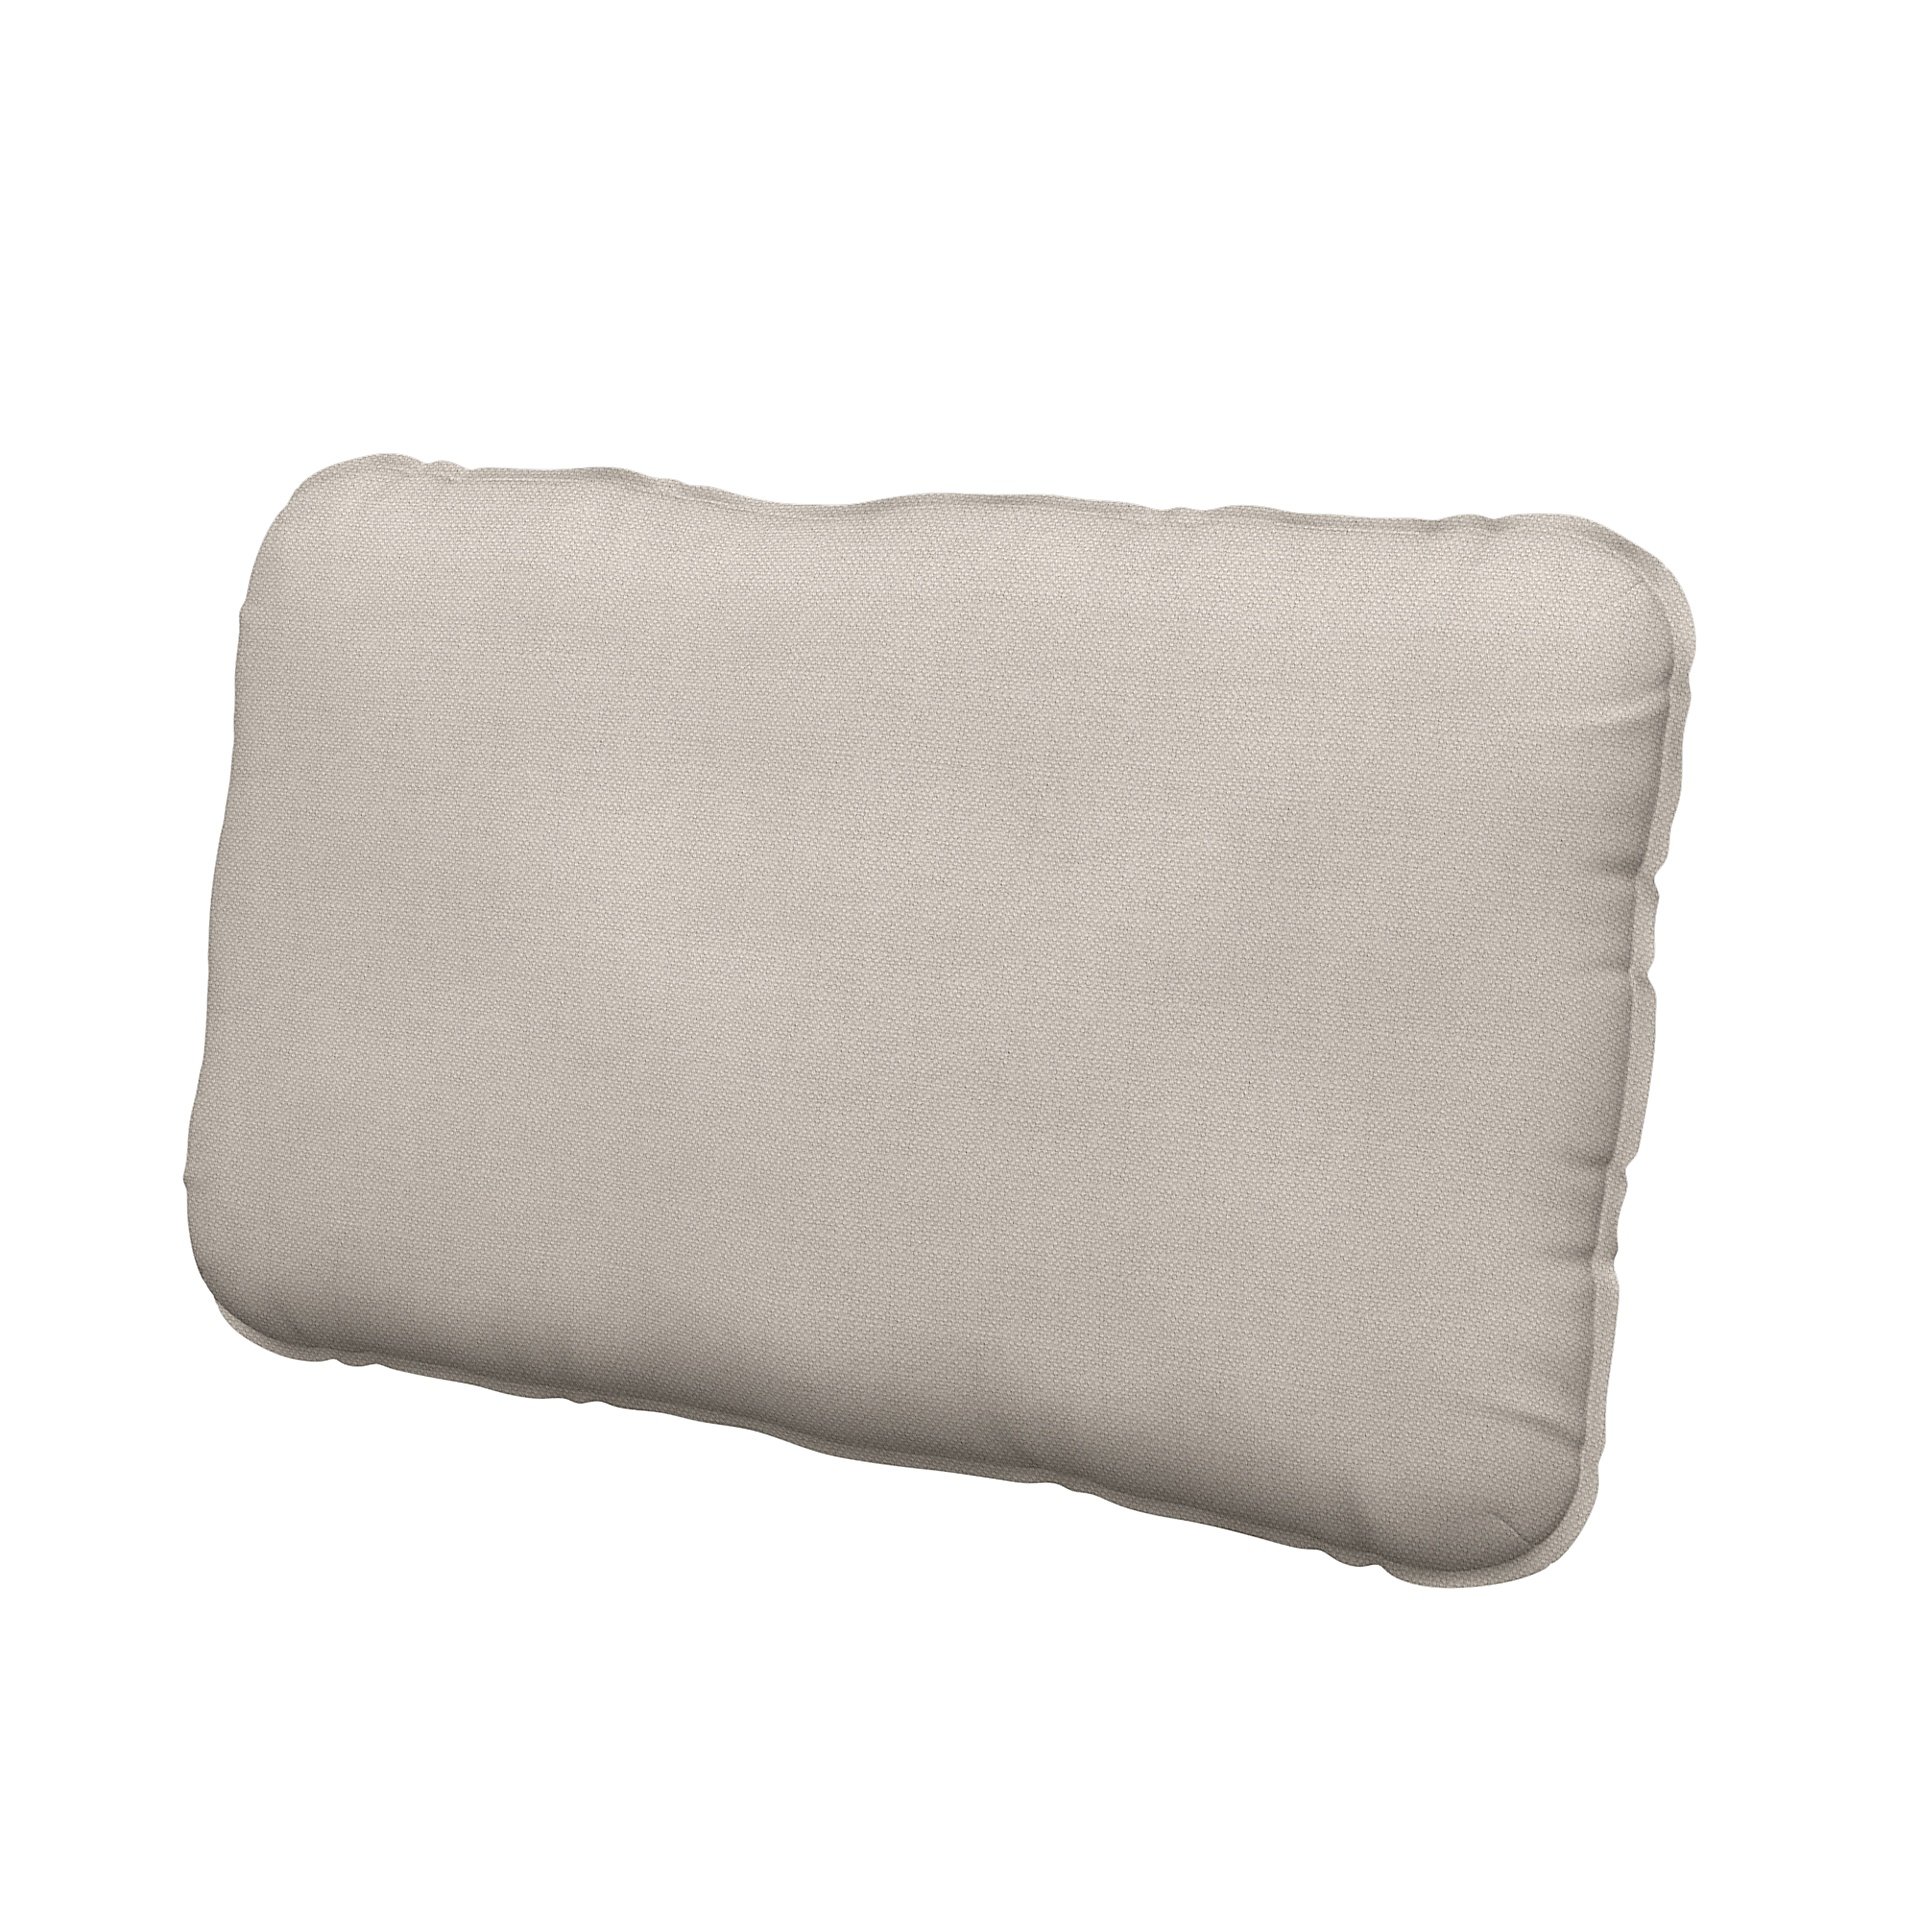 IKEA - Vallentuna back cushion cover 40x75cm, Chalk, Linen - Bemz